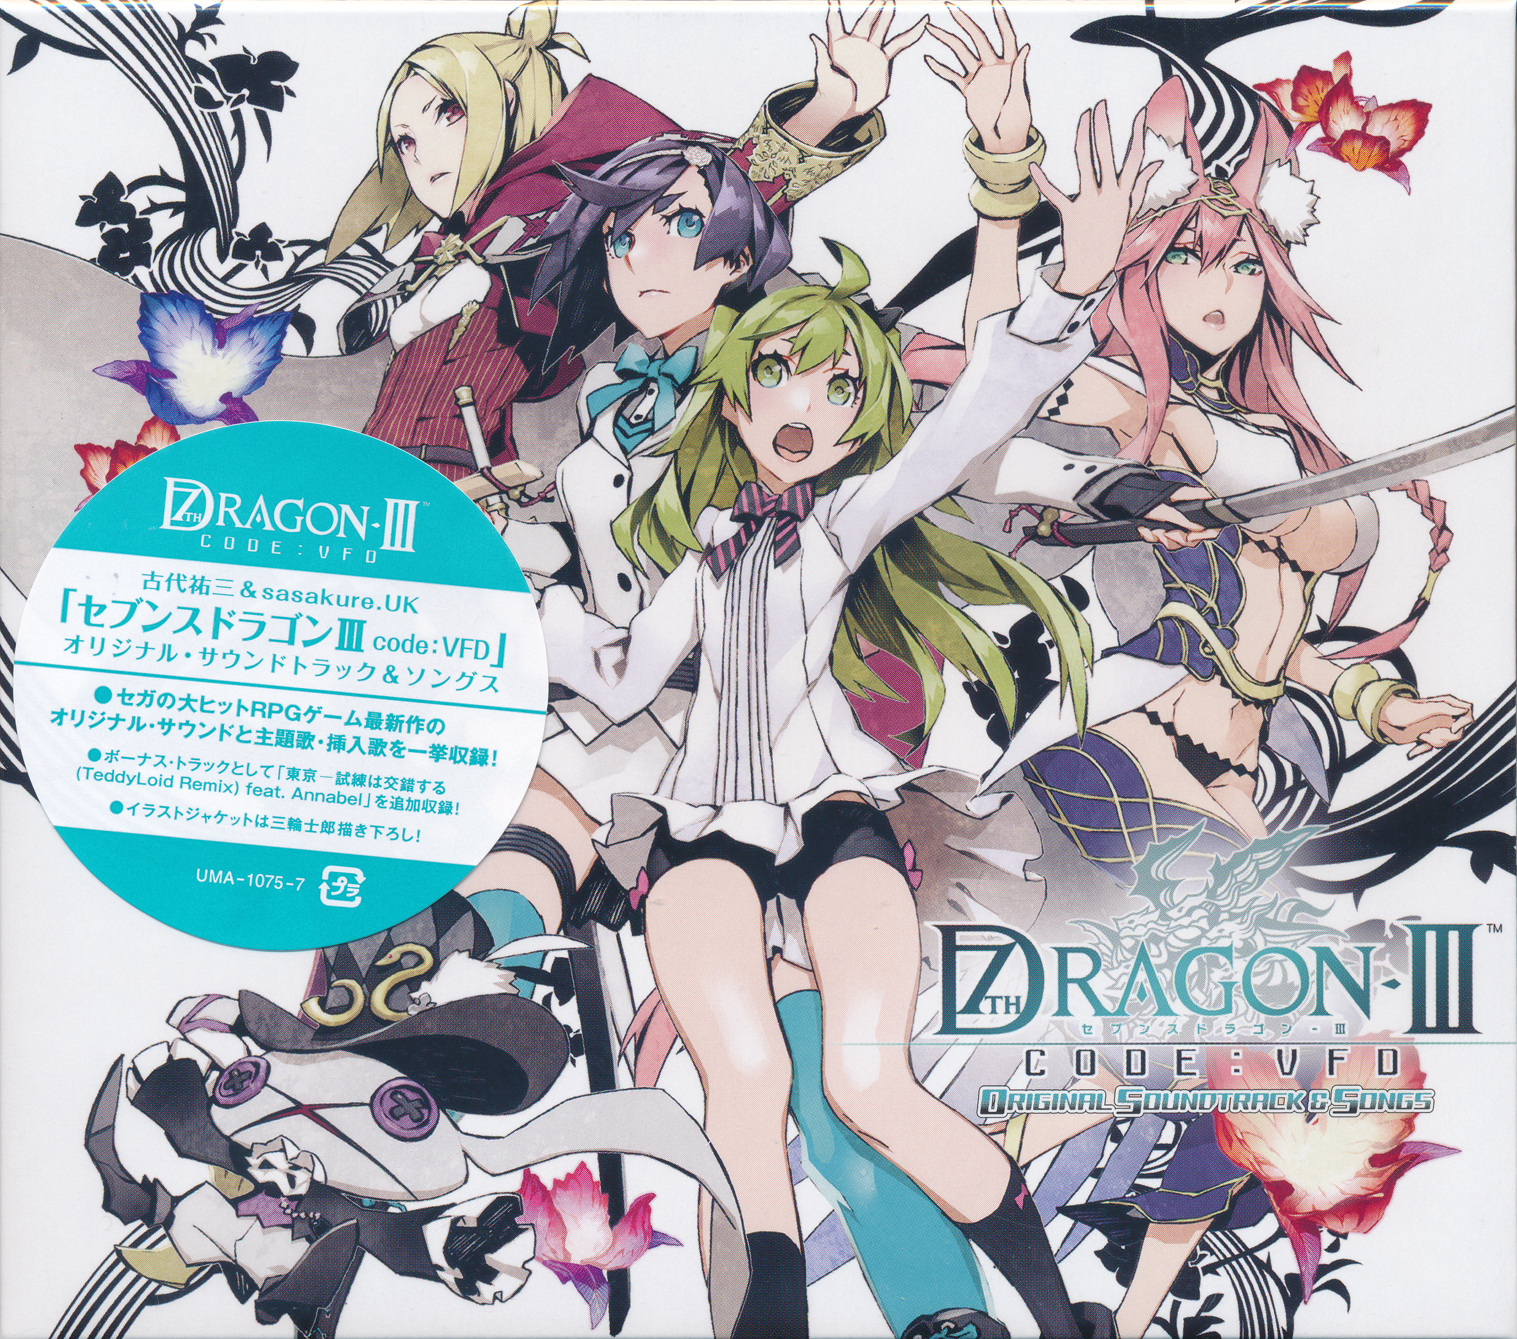 7th Dragon III Code: VFD Original Soundtrack & Songs - Sega Retro